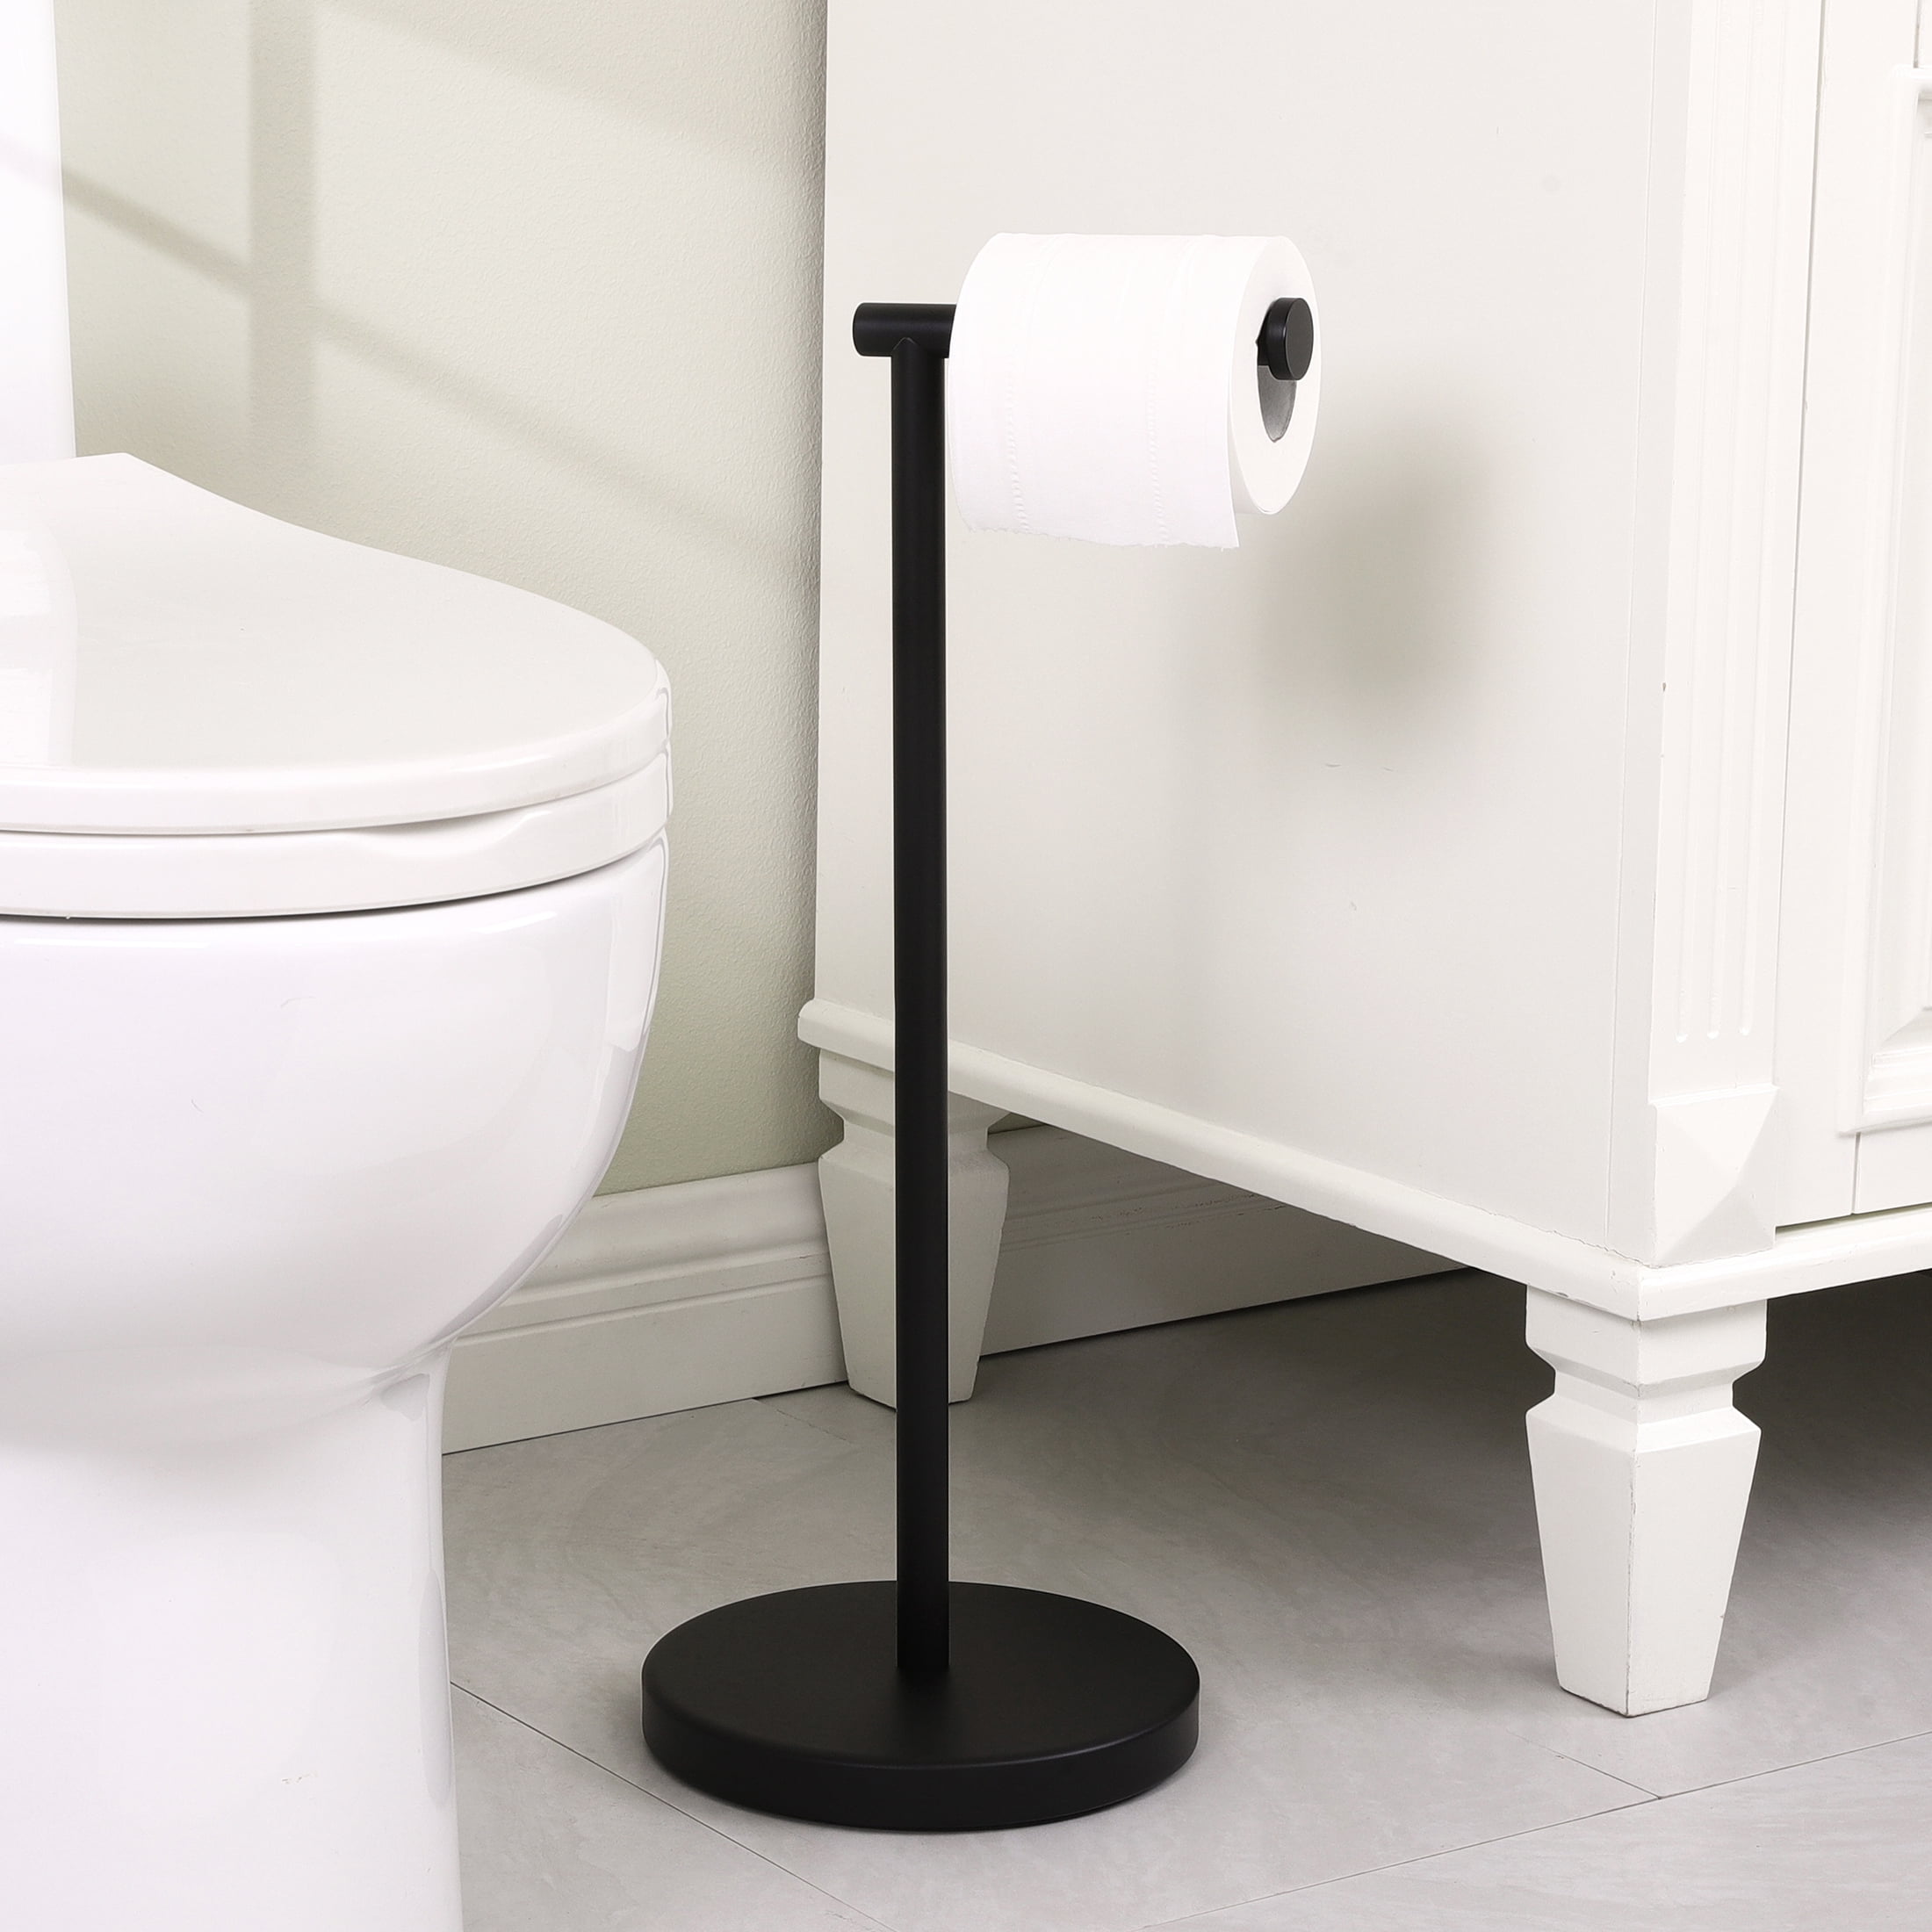 kimzcn Matte Black Toilet Paper Holder Stand Toilet Paper Roll Holder with Shelf Reserve Free Standing Portable Tissue Storag